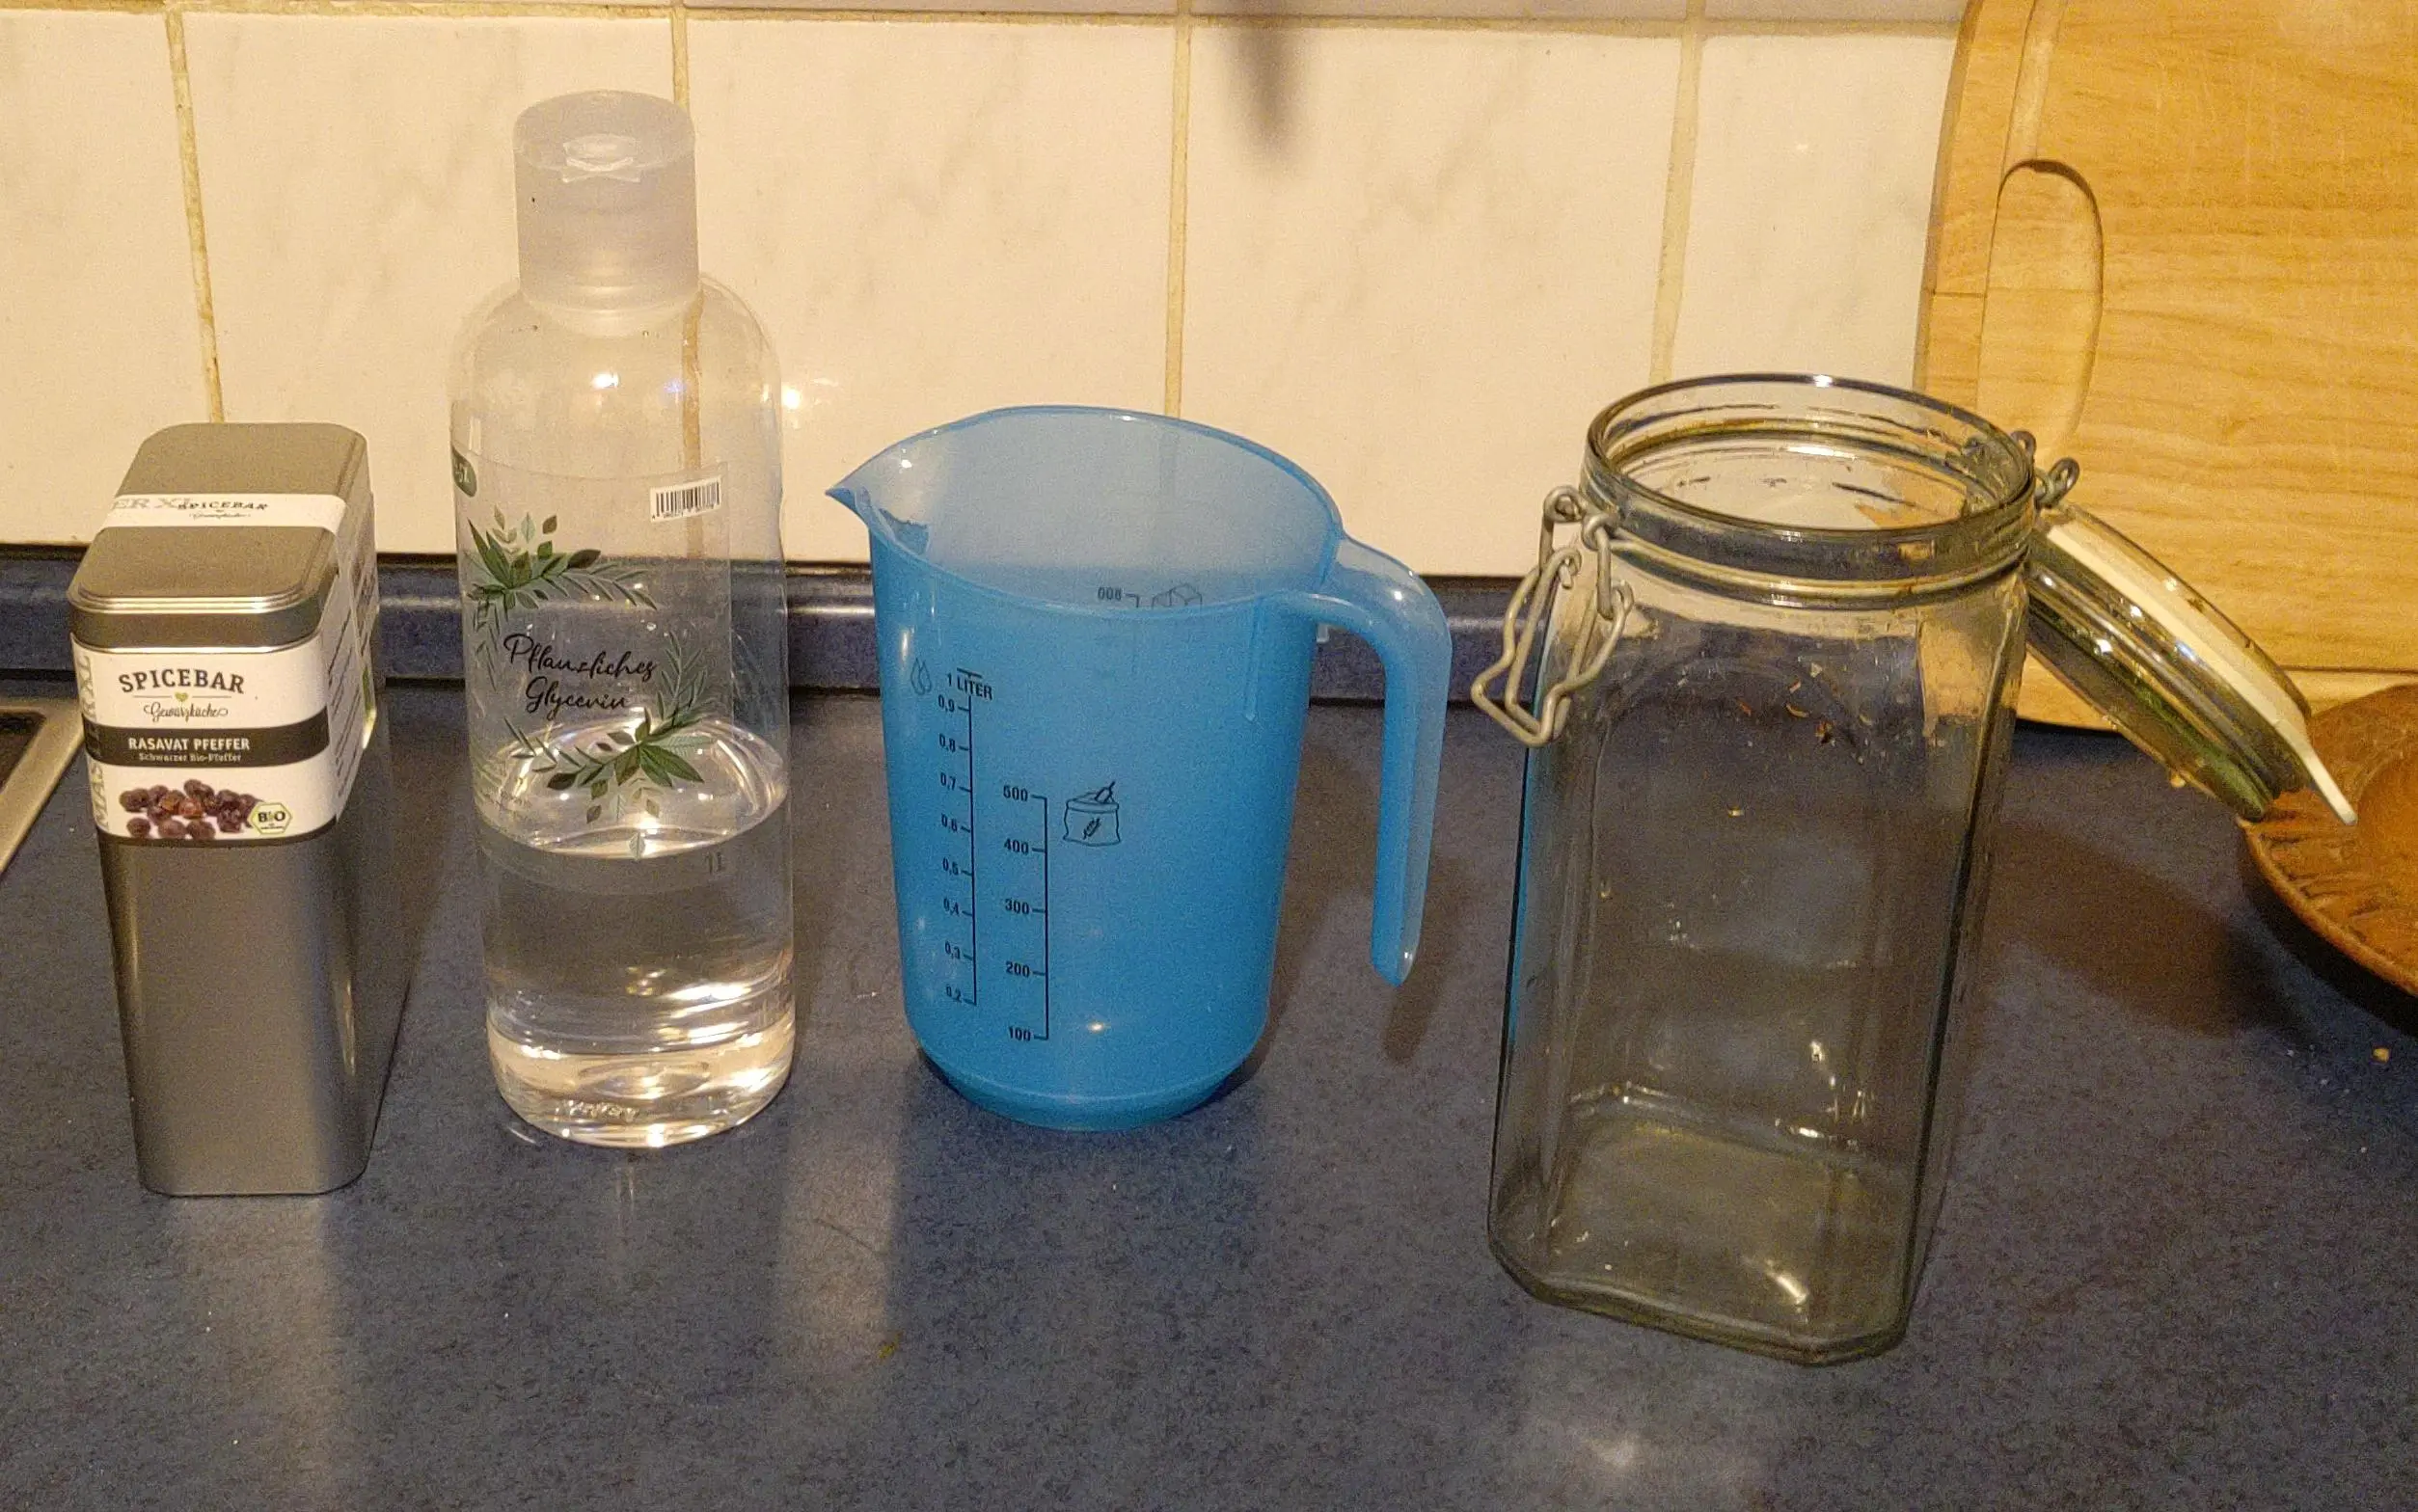 pepper corn tin, glycerin bottle, measuring cup, and a mason jar